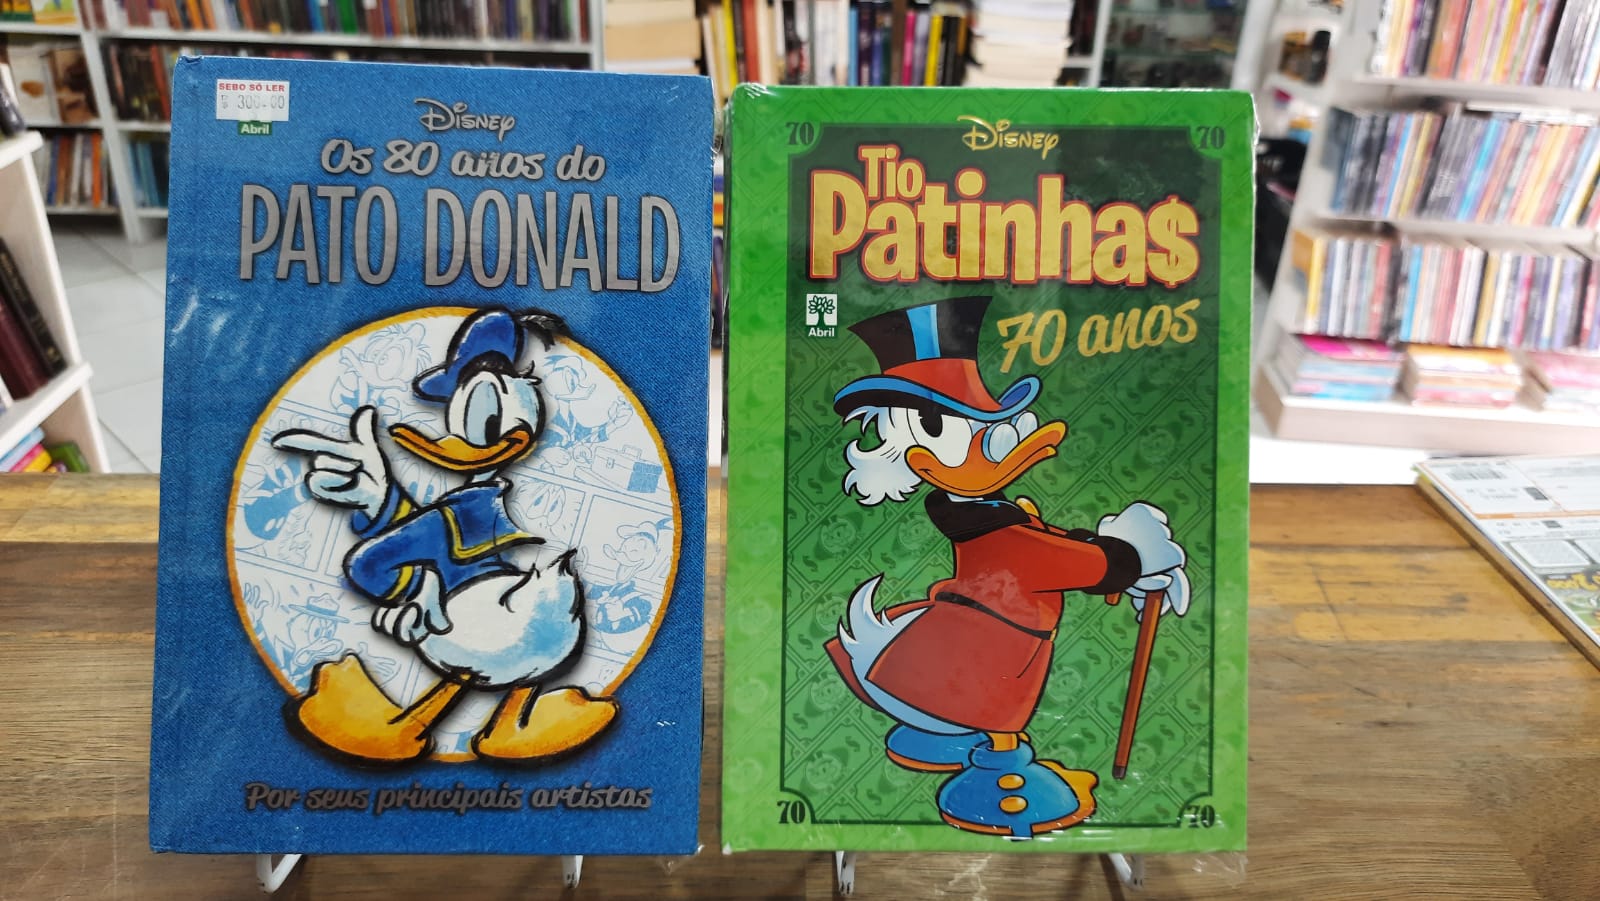 Pato Donald - Os 80 anos + Tio Patinhas 70 anso